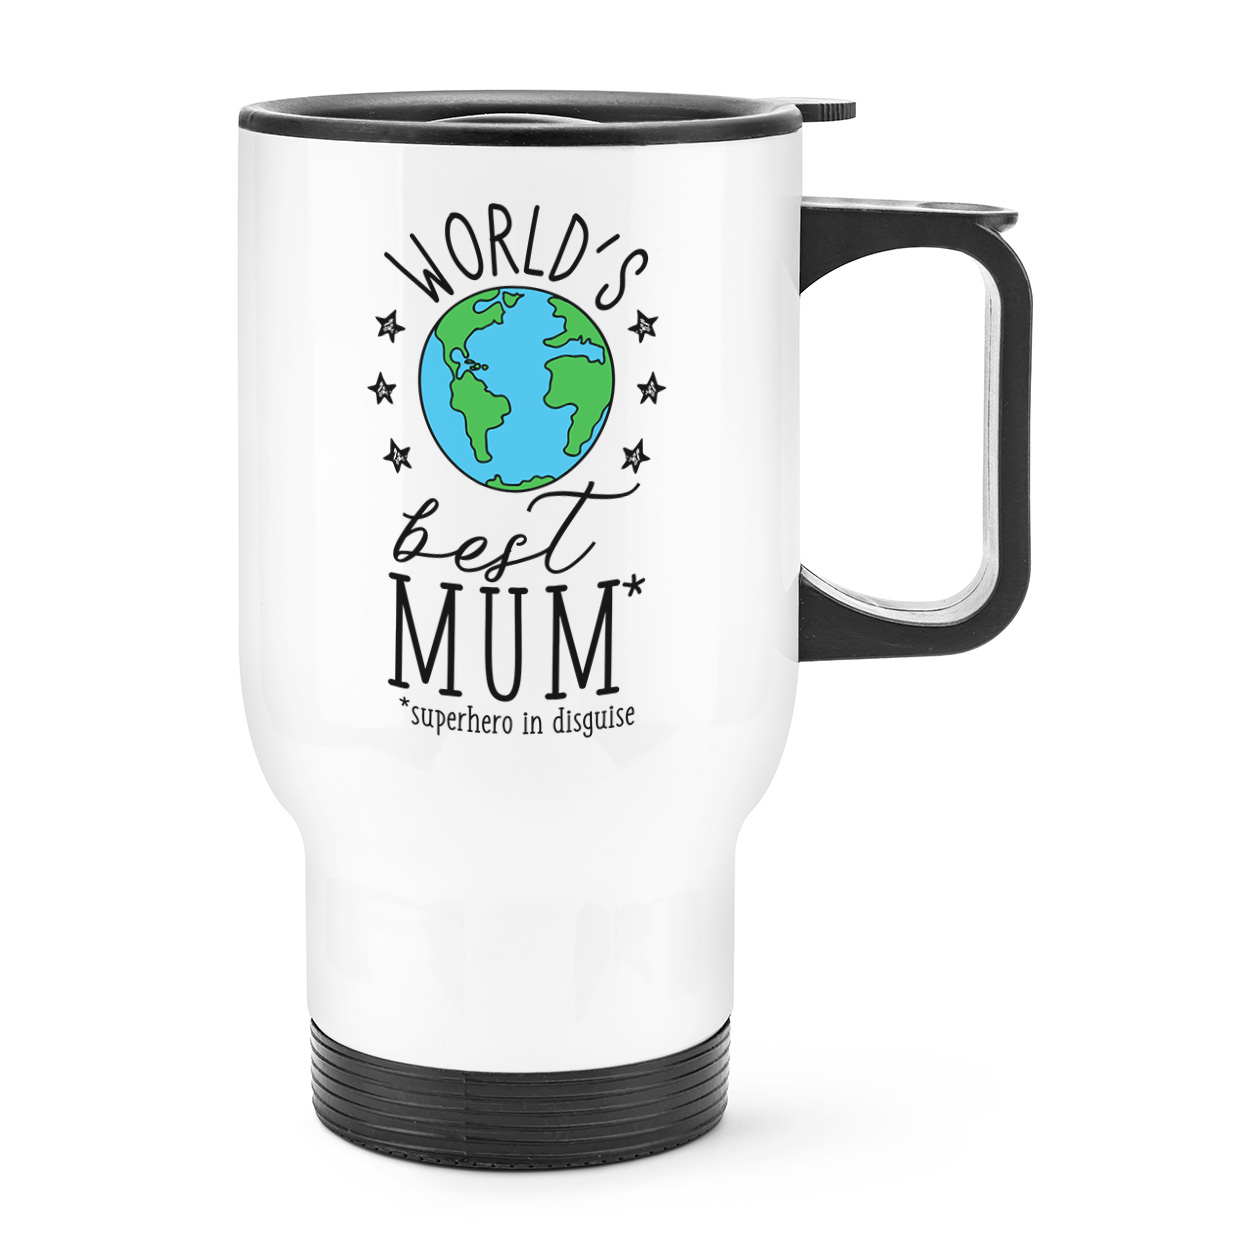 World's Best Mum Travel Mug Cup With 